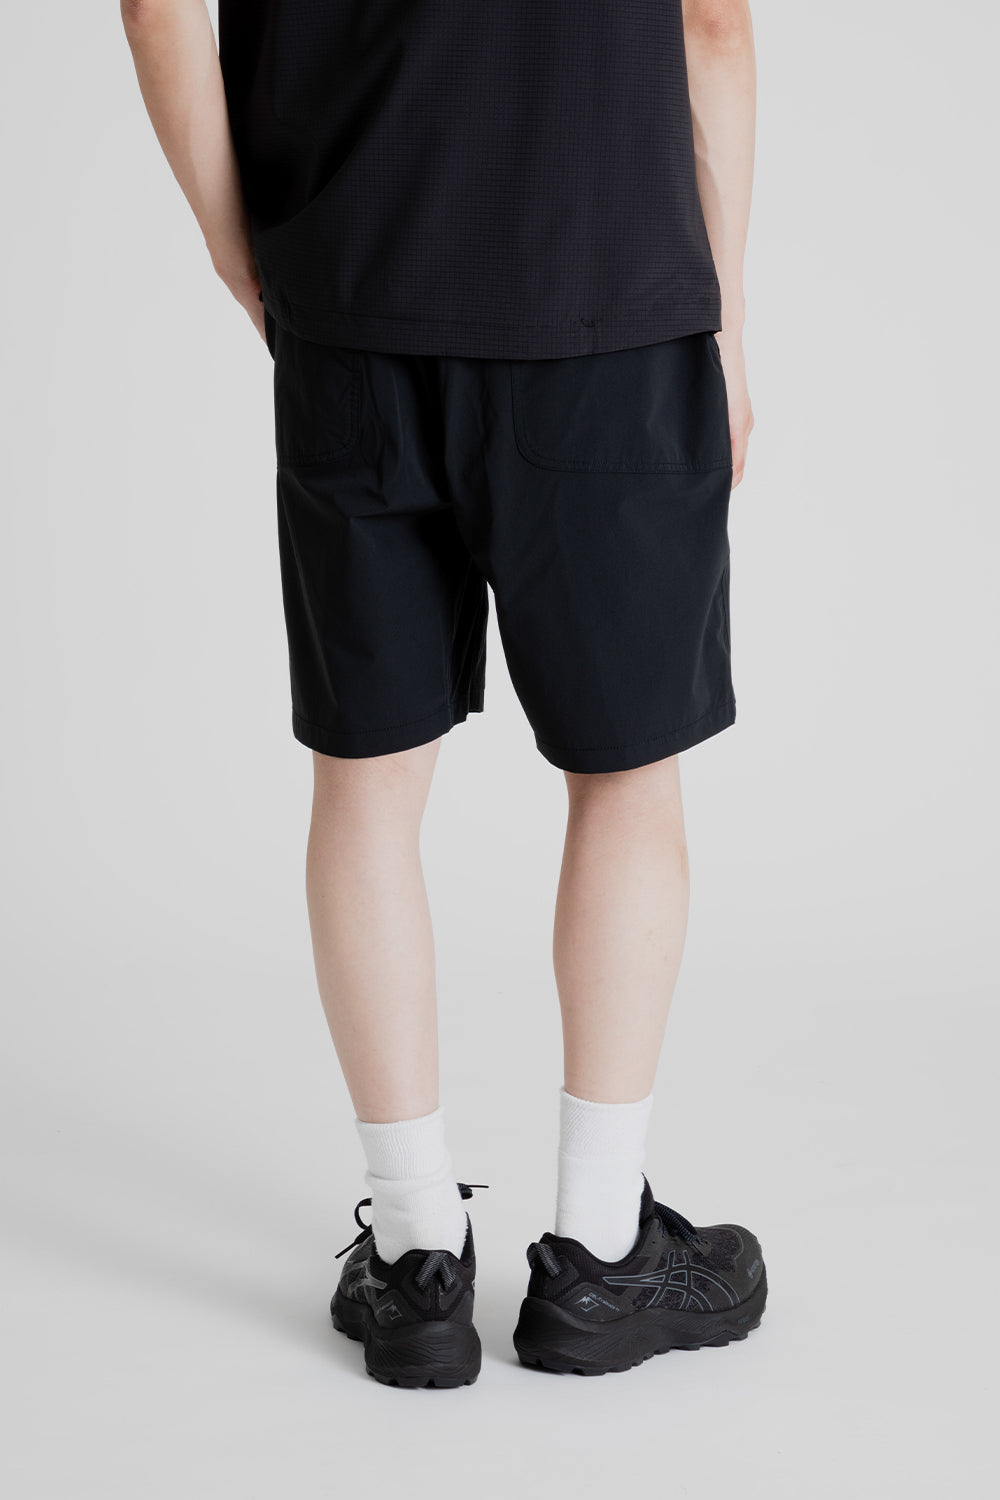 Nylon Limber Shorts - Black